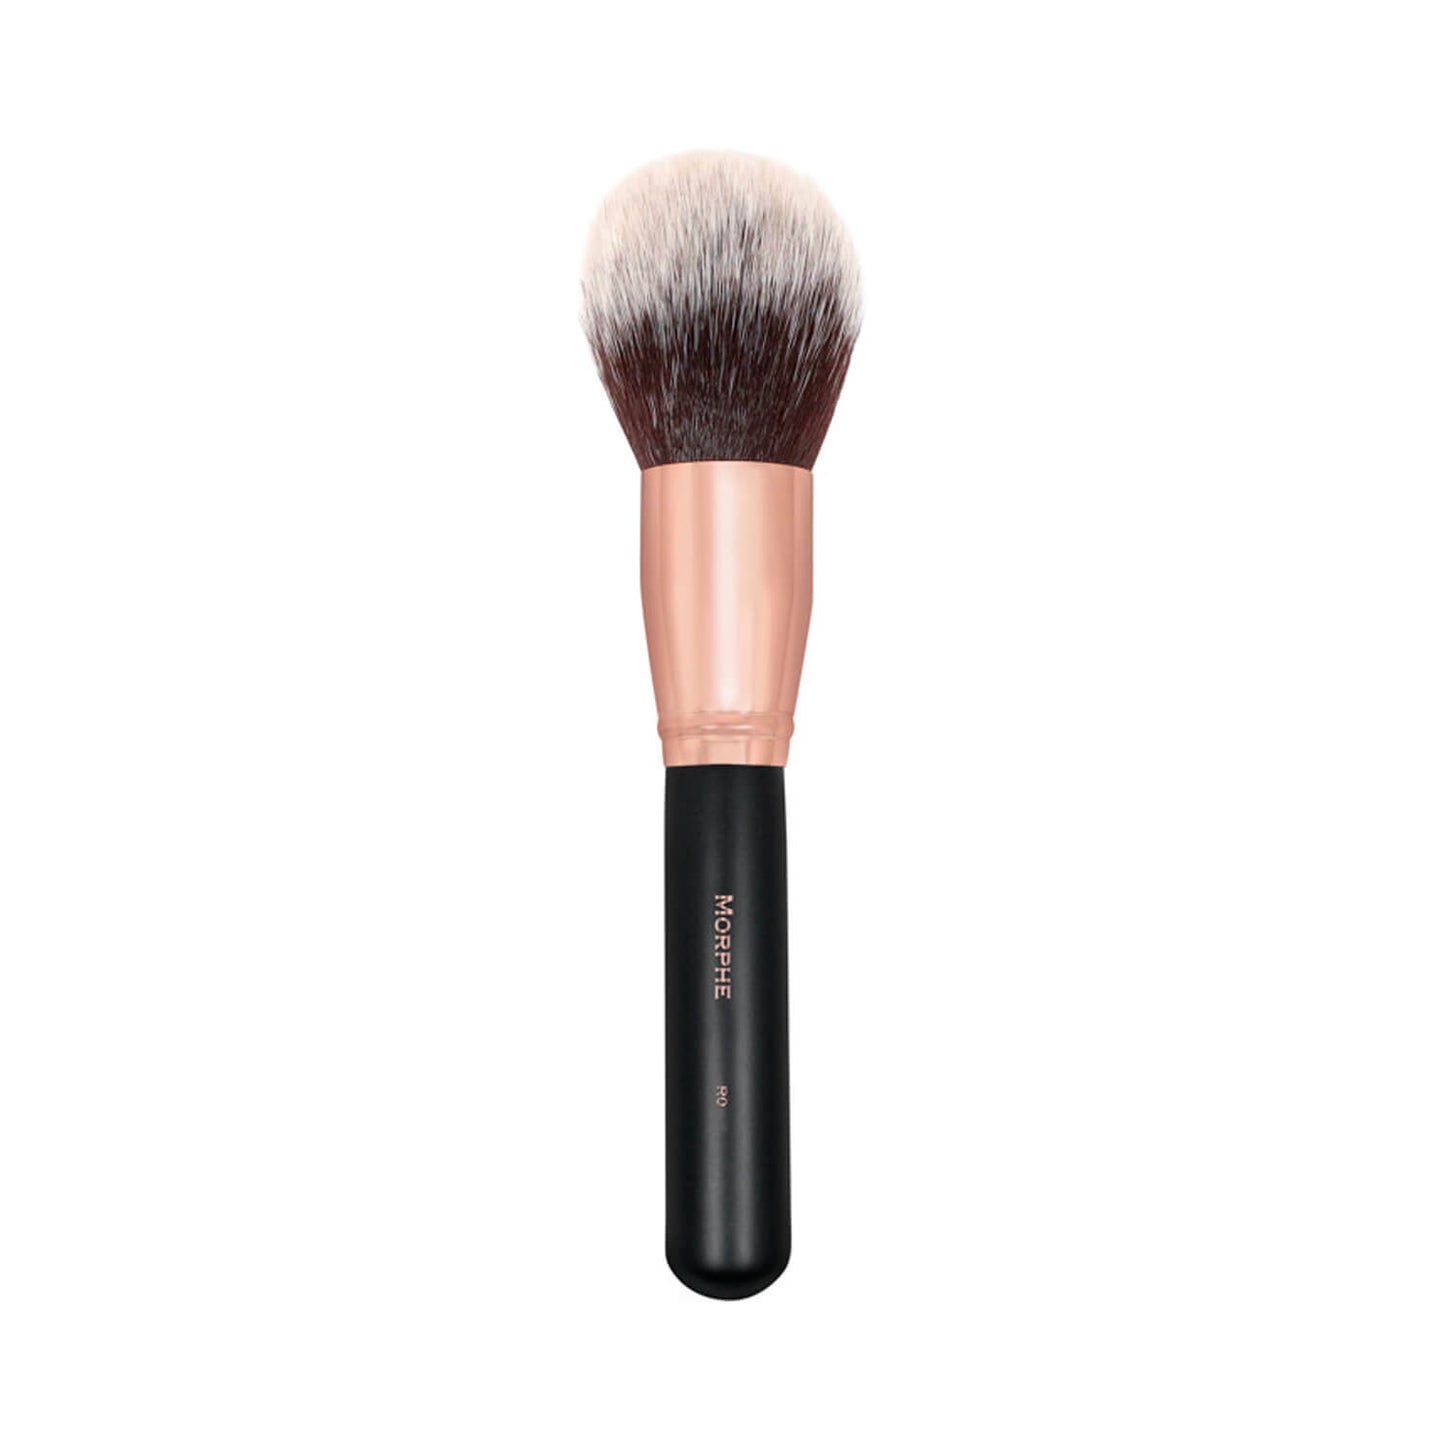 Morphe Cosmetics R0 Deluxe Powder Brush